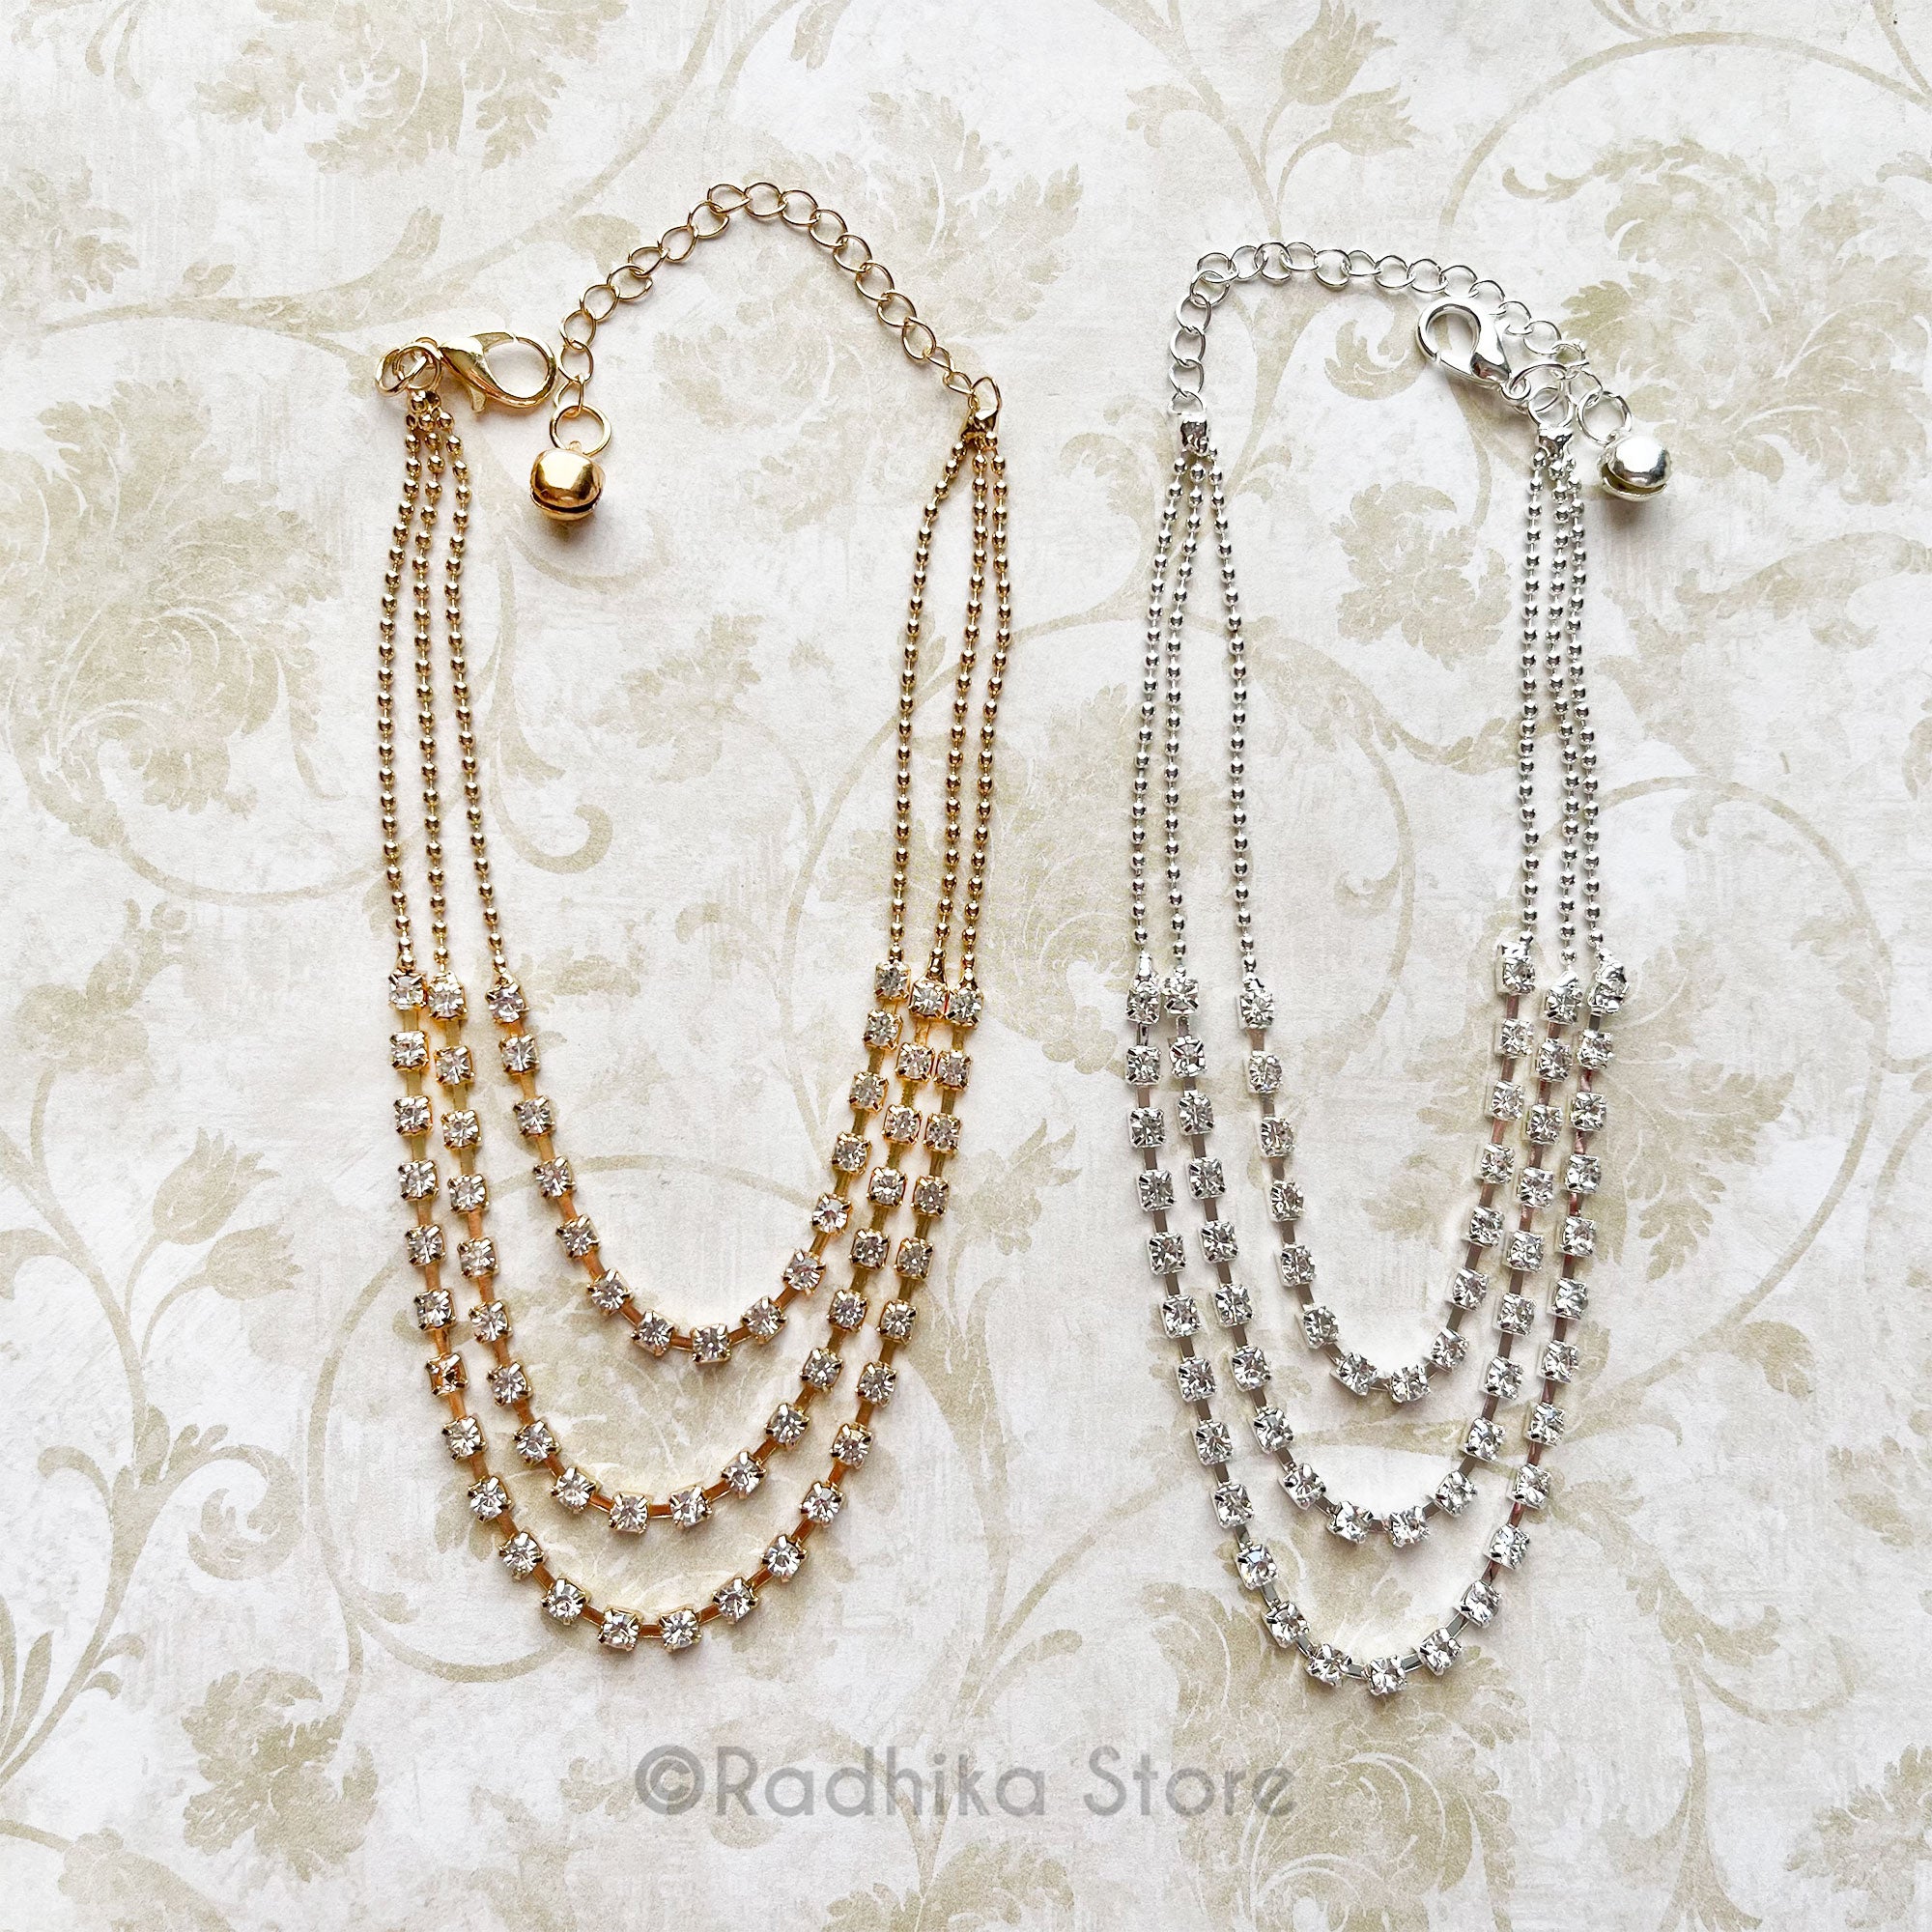 Three Chain Rhinestone Deity Necklace-Silver or Gold Metal-